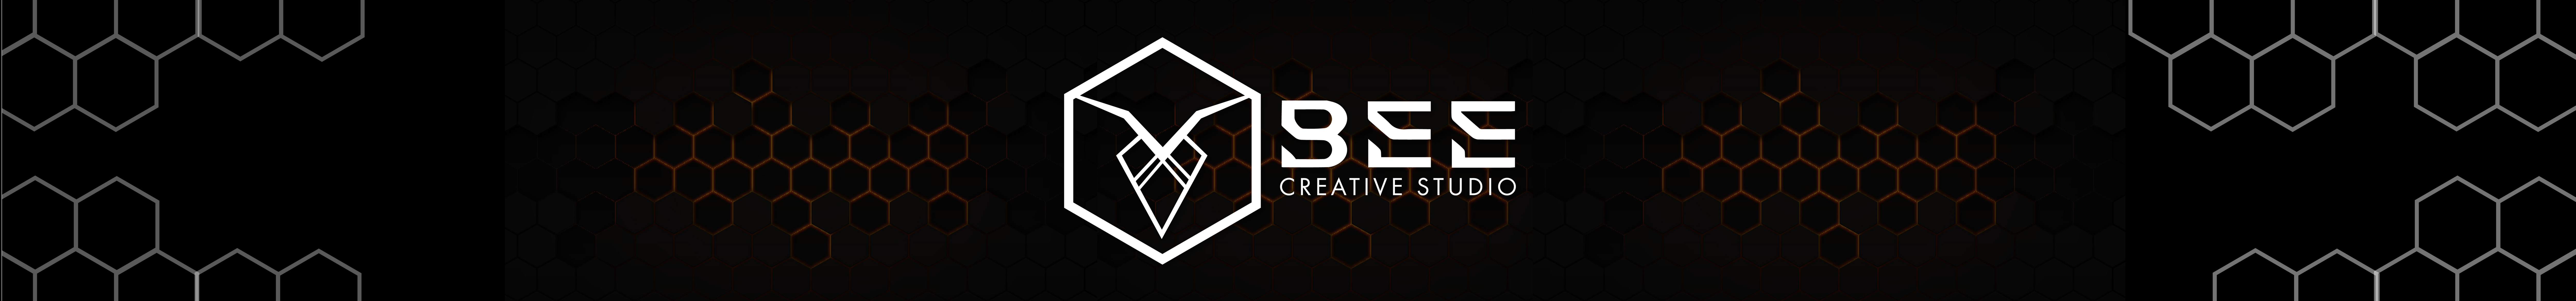 BEE Creative Studio's profile banner